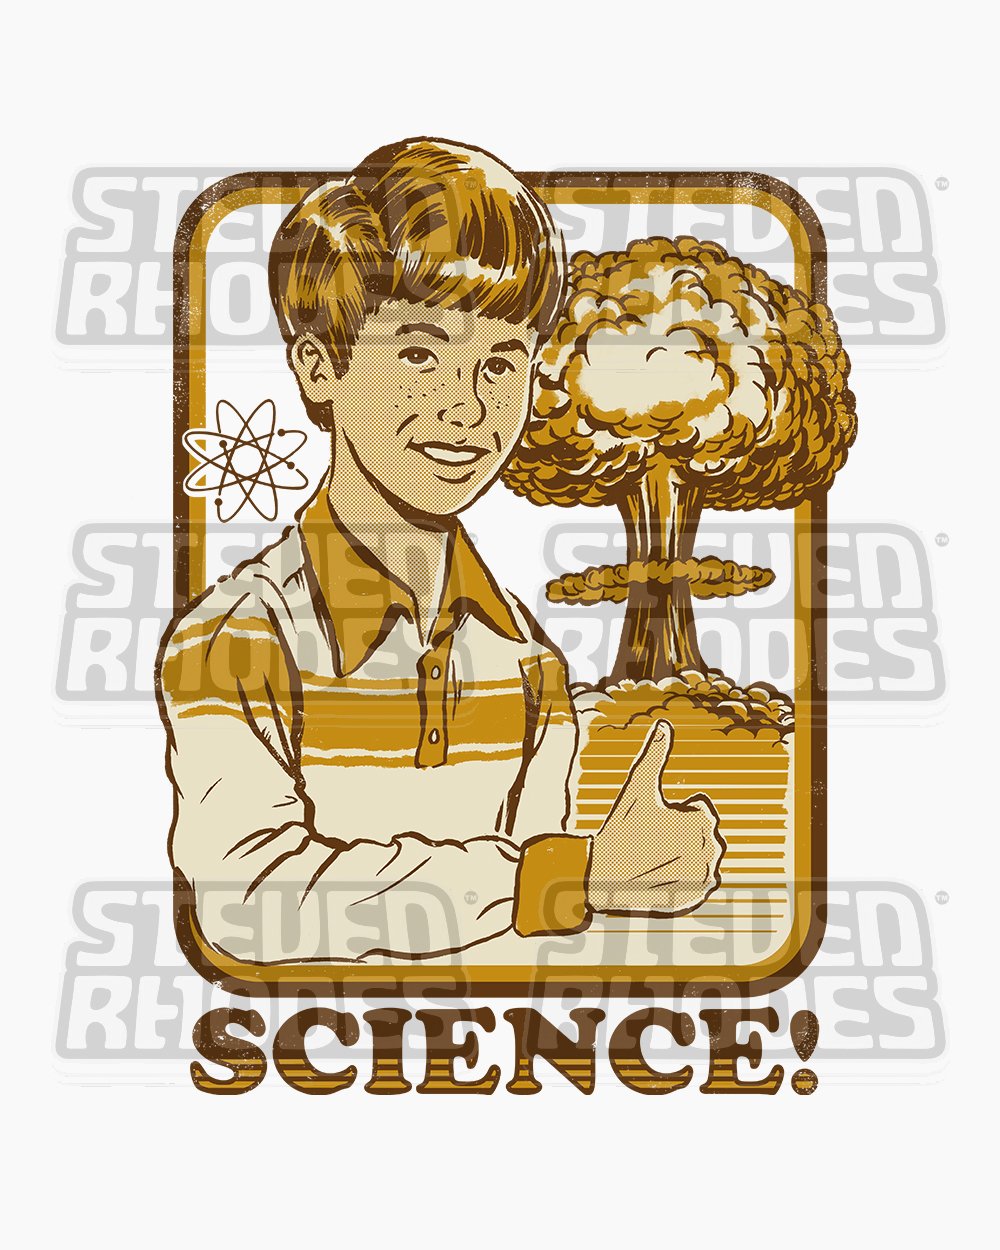 Science! T-Shirt Australia Online #colour_white